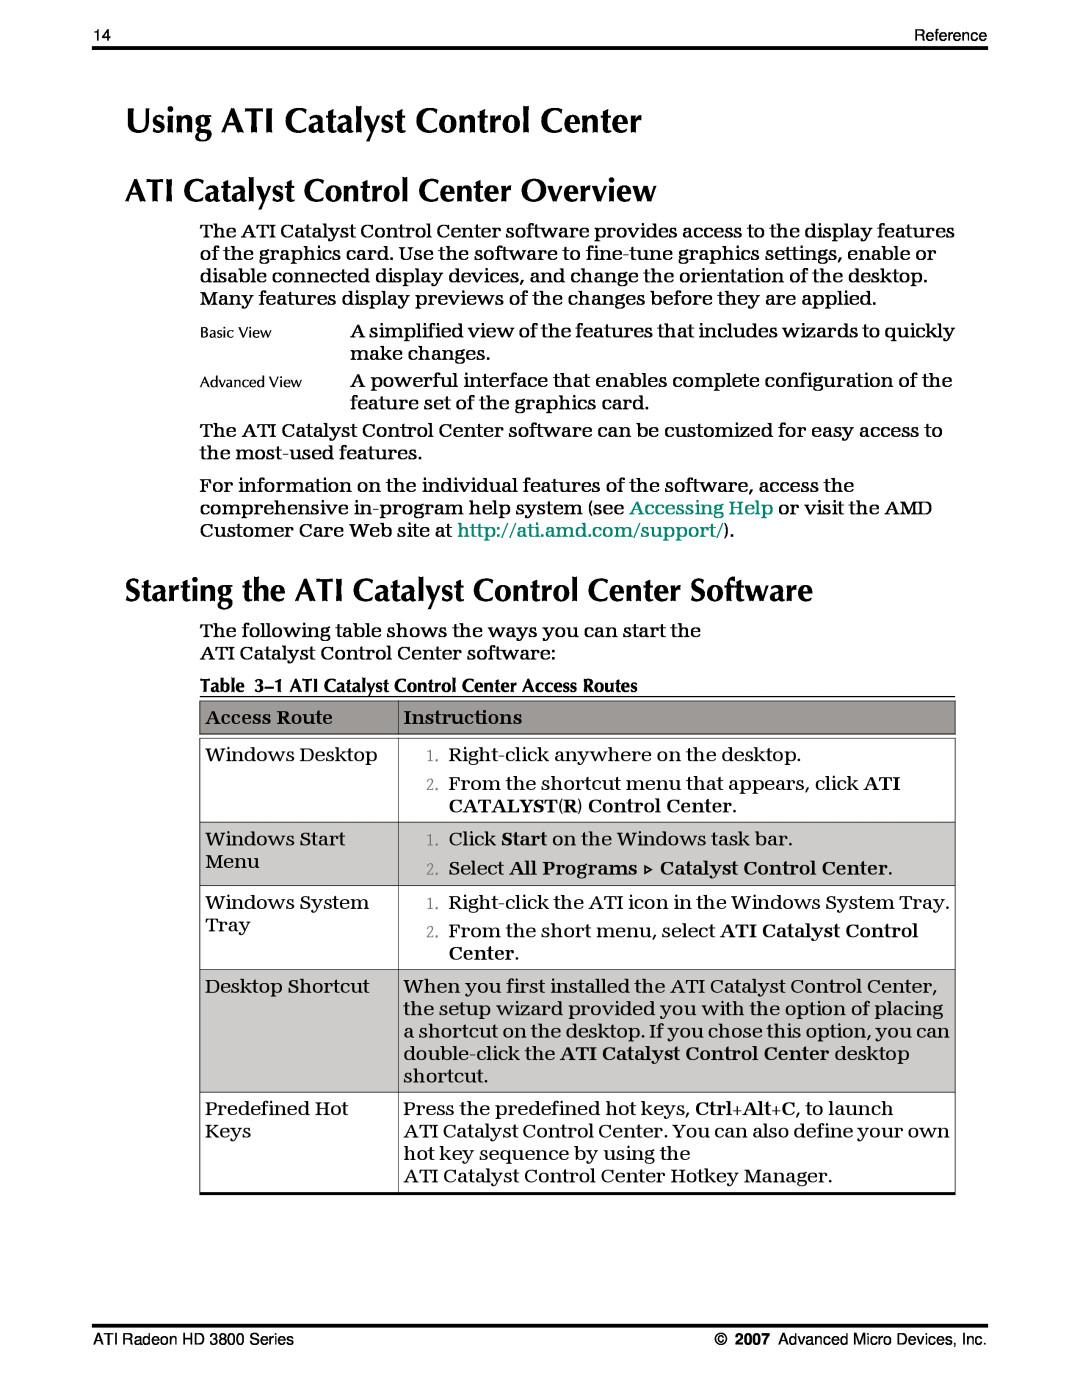 AMD HD 3800 manual Using ATI Catalyst Control Center, ATI Catalyst Control Center Overview, Access Route, Instructions 